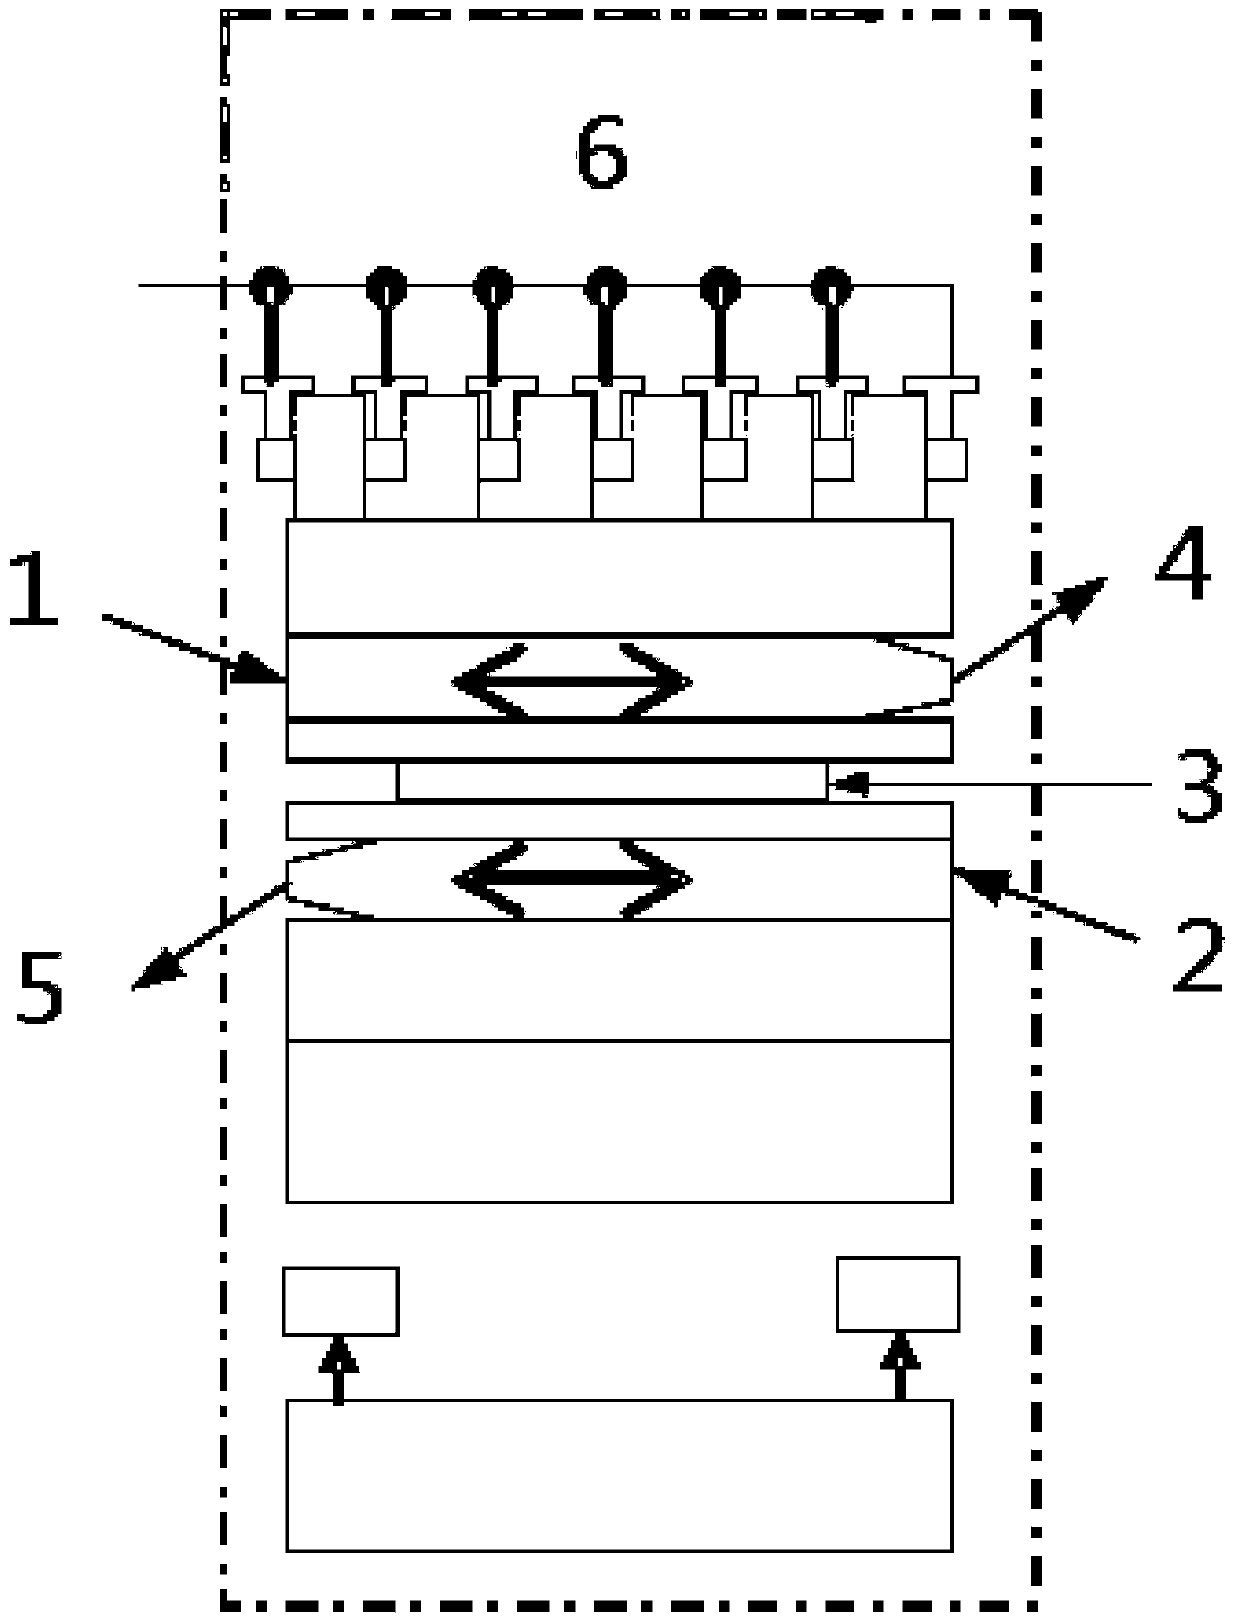 Edge Shape Control Method of Sendzimir 20-high Rolling Mill